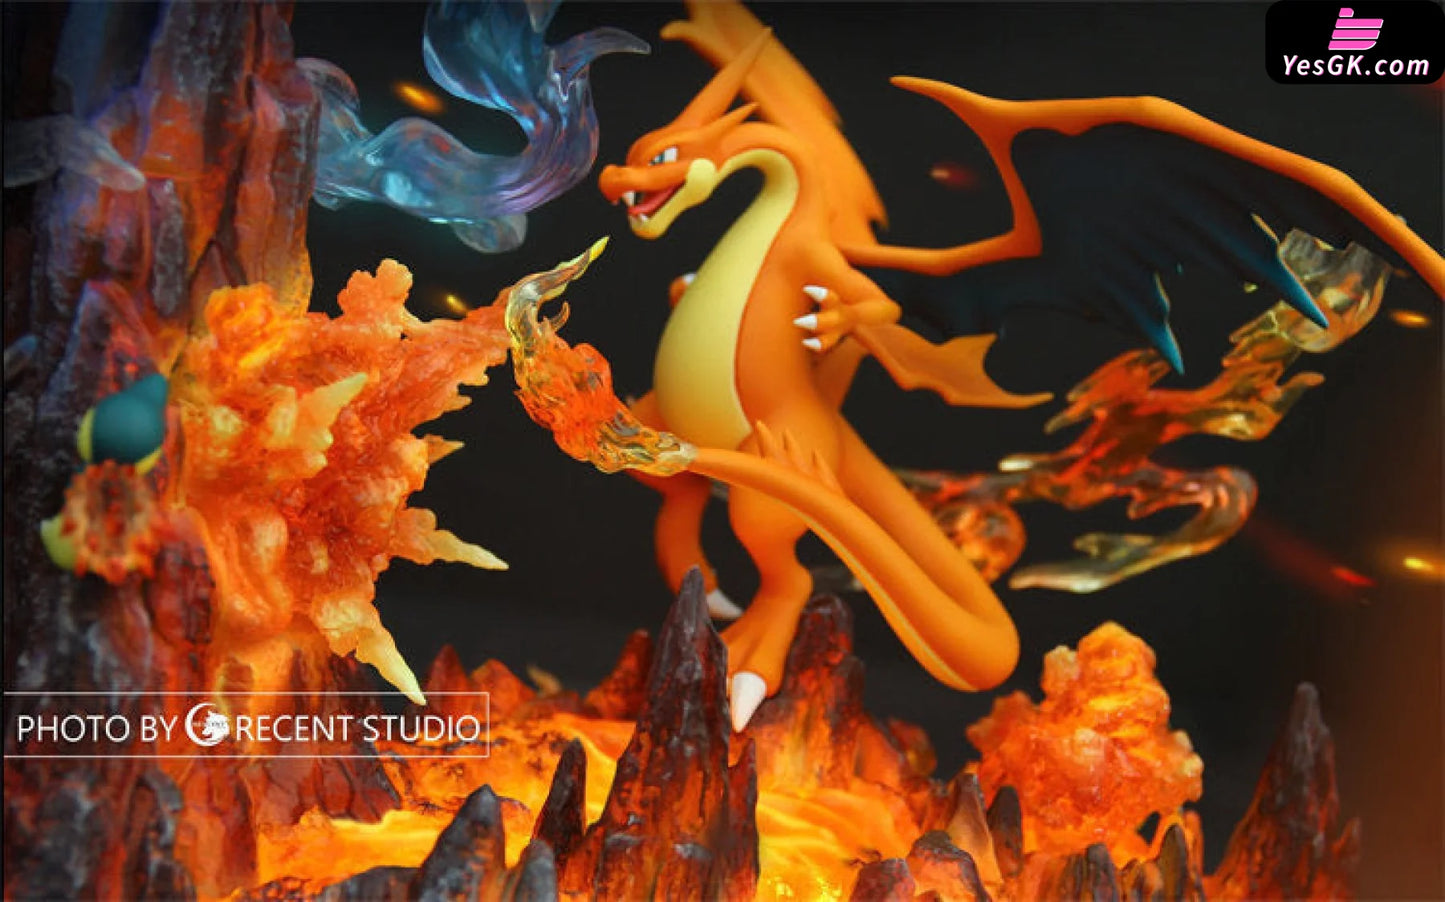 Pokémon Mega Charizard Xy Resin Statue - Crescent Studio [In Stock]